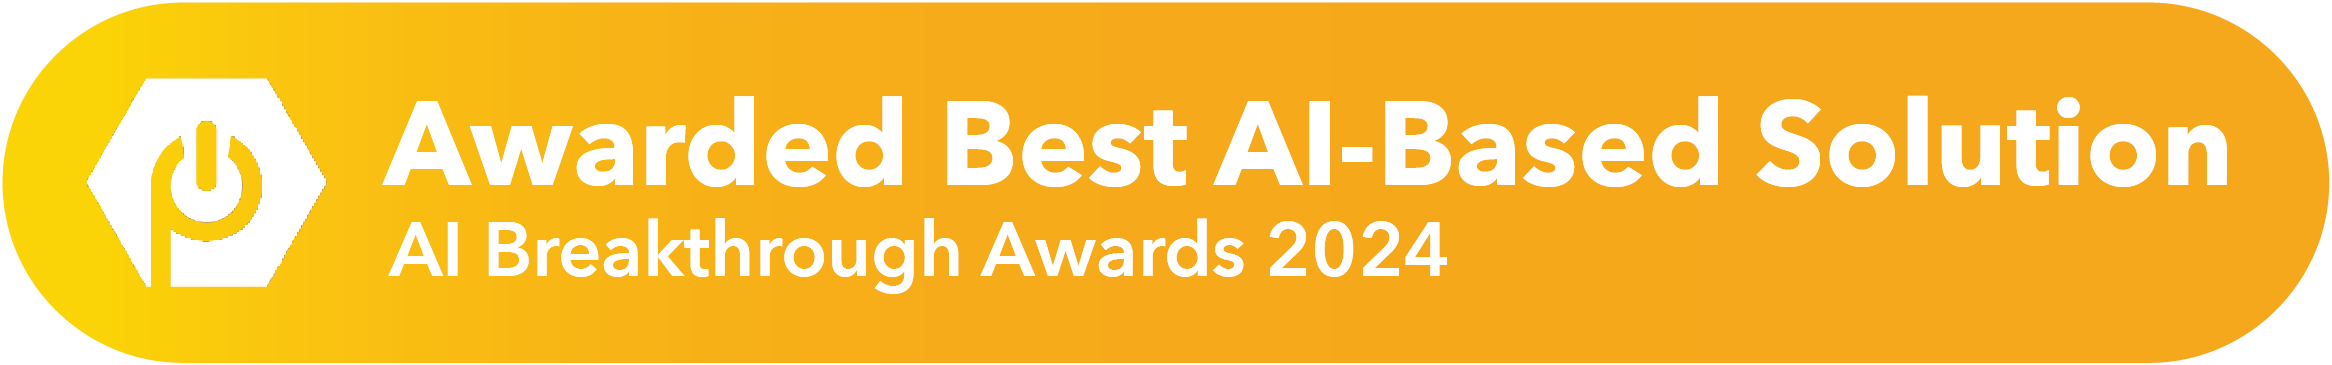 Awarded best AI-based solution banner